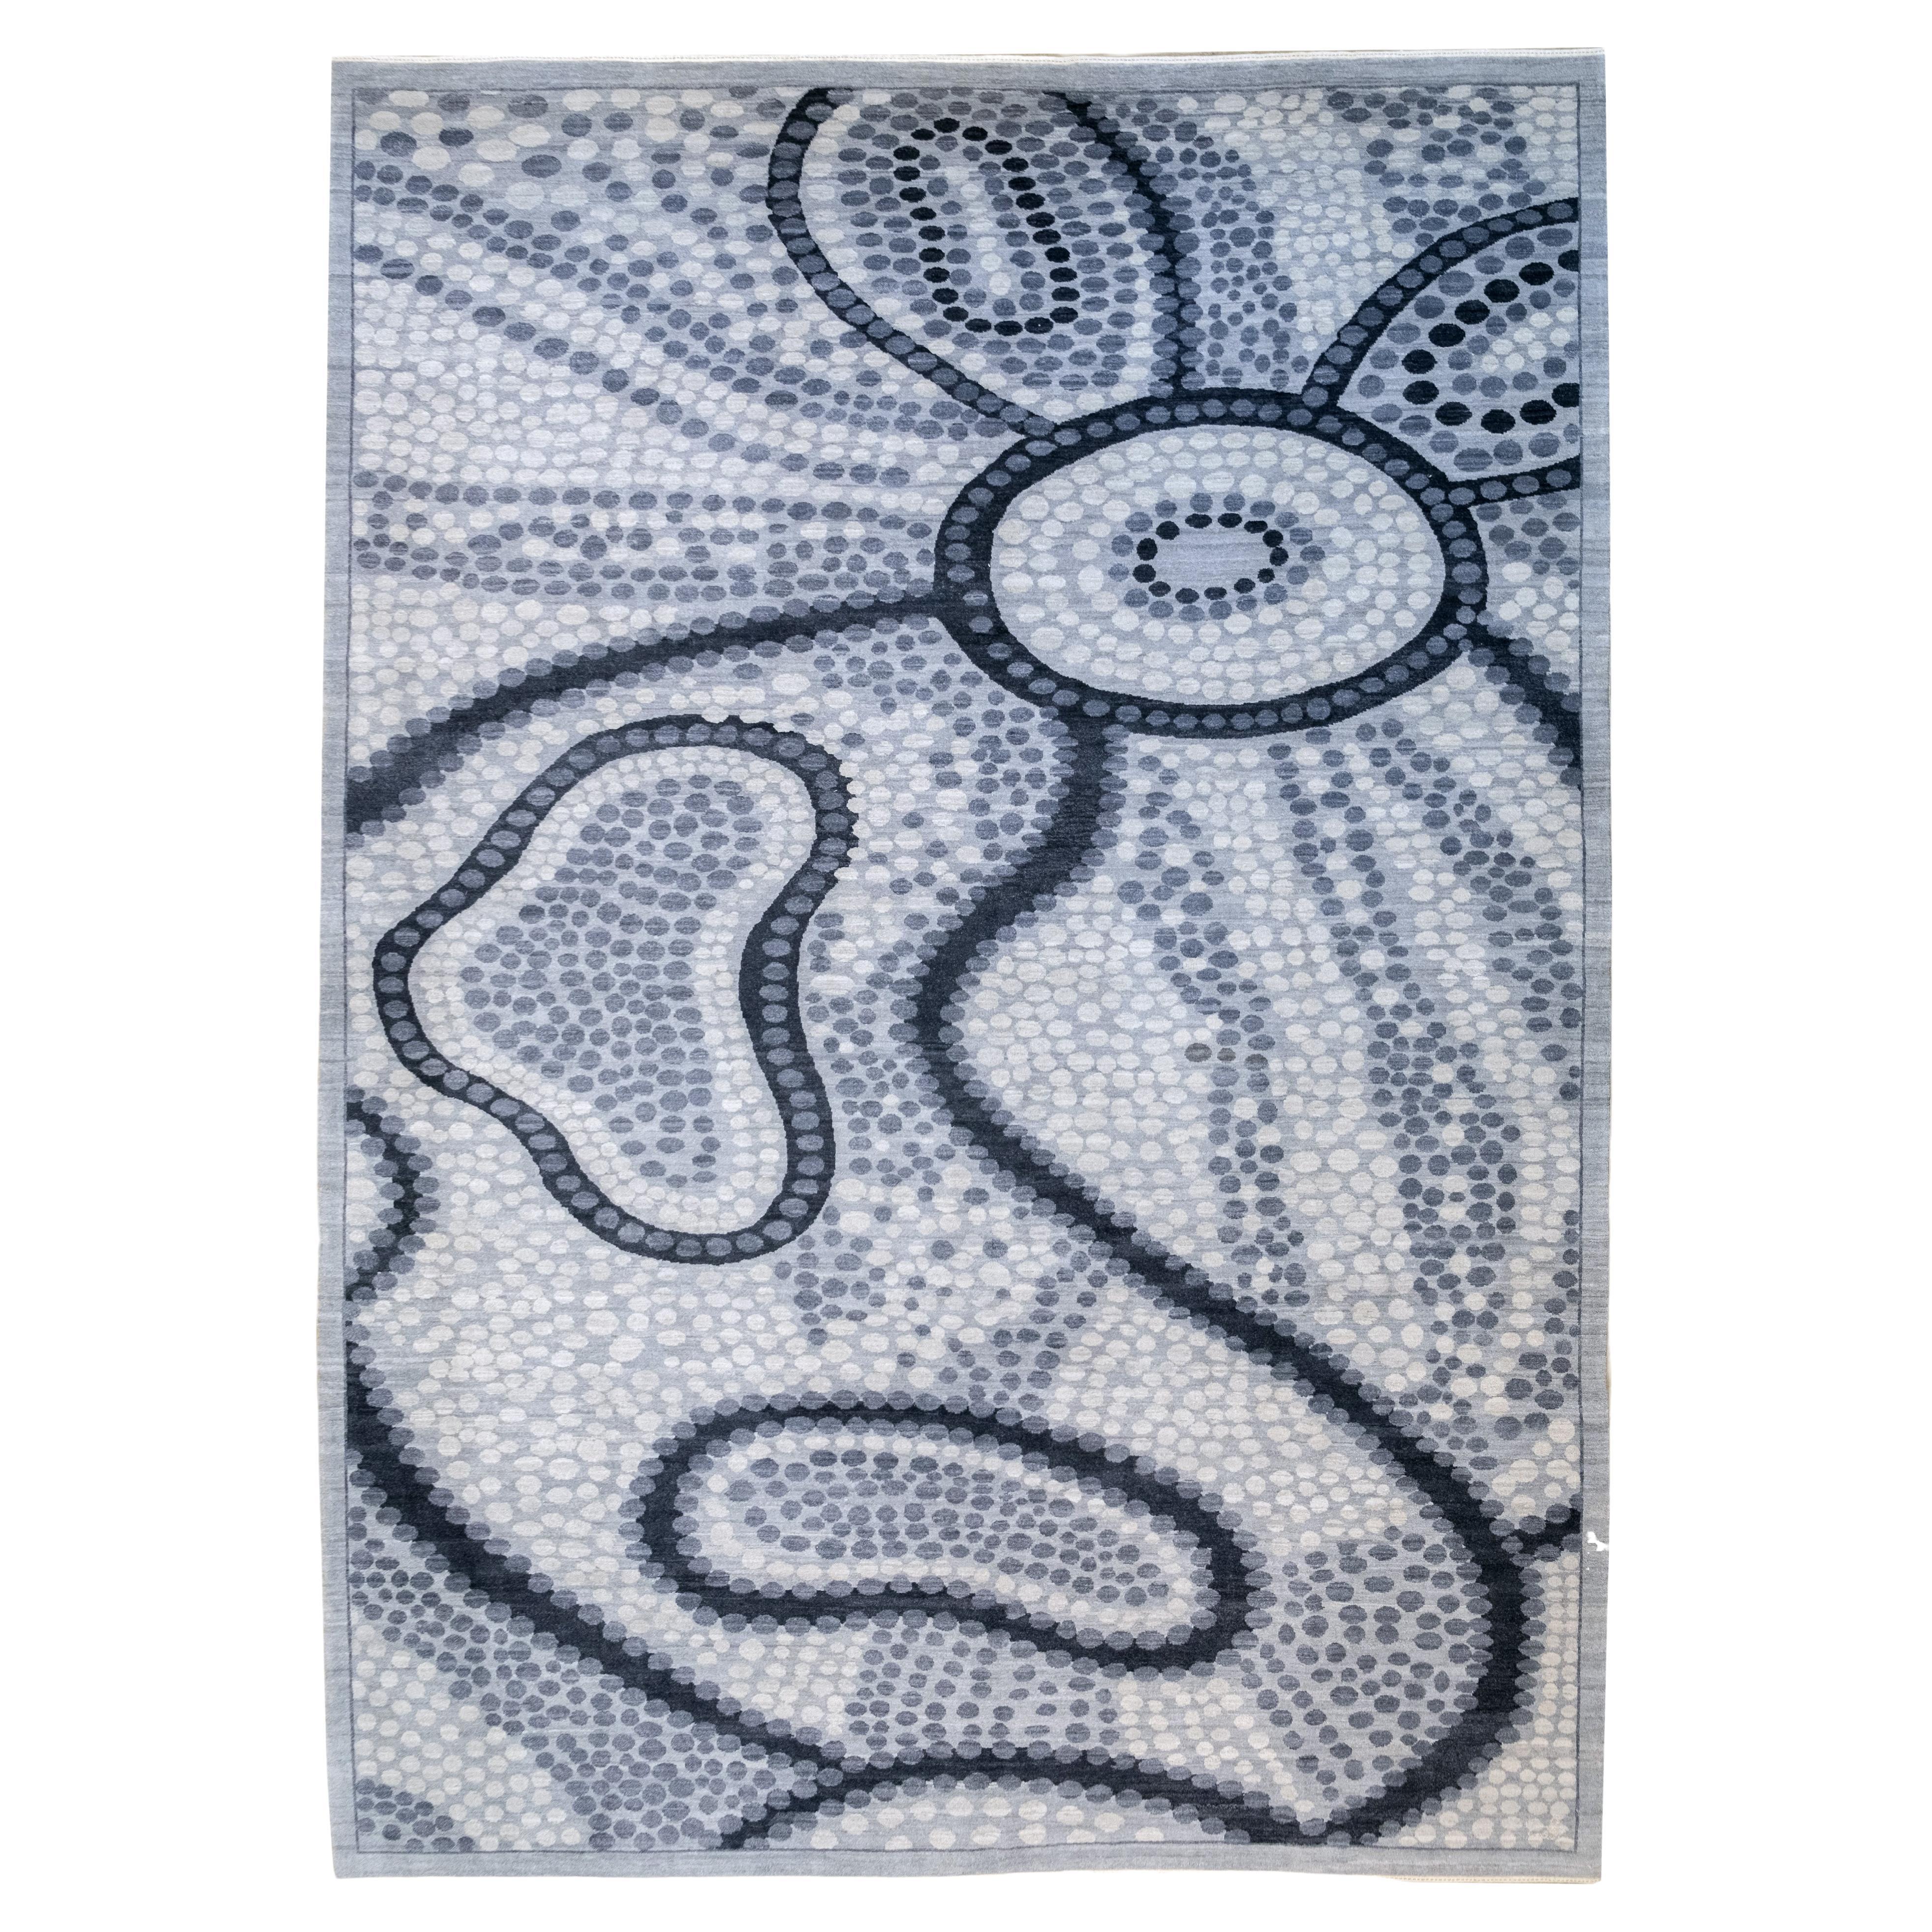 Orley Shabahang Signature “Badu” Gray on Grey Contemporary Persian Carpet For Sale